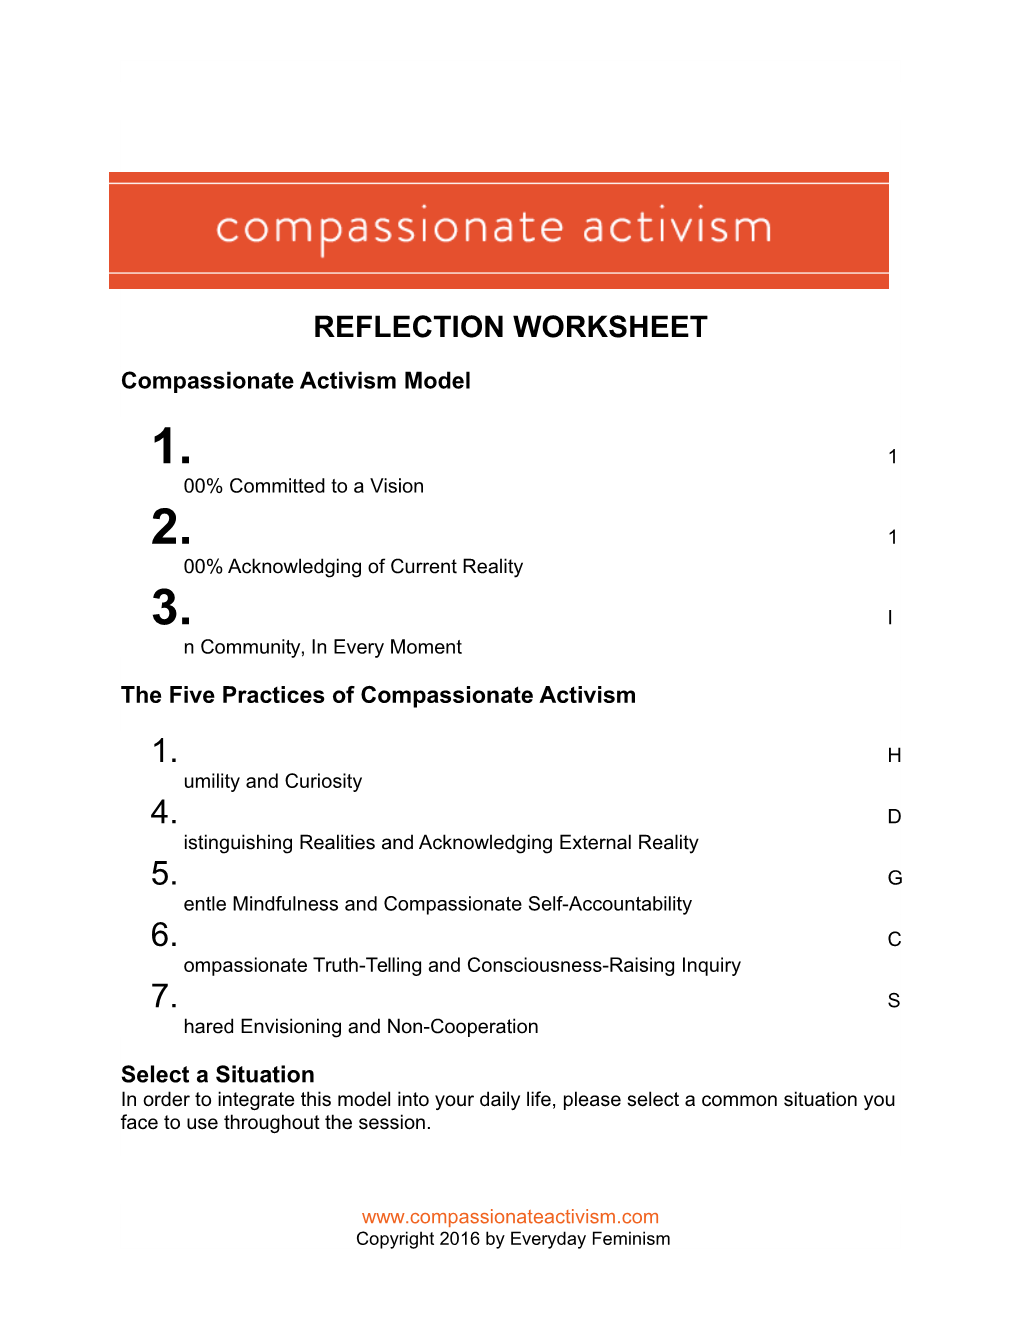 Compassionate Activism Model